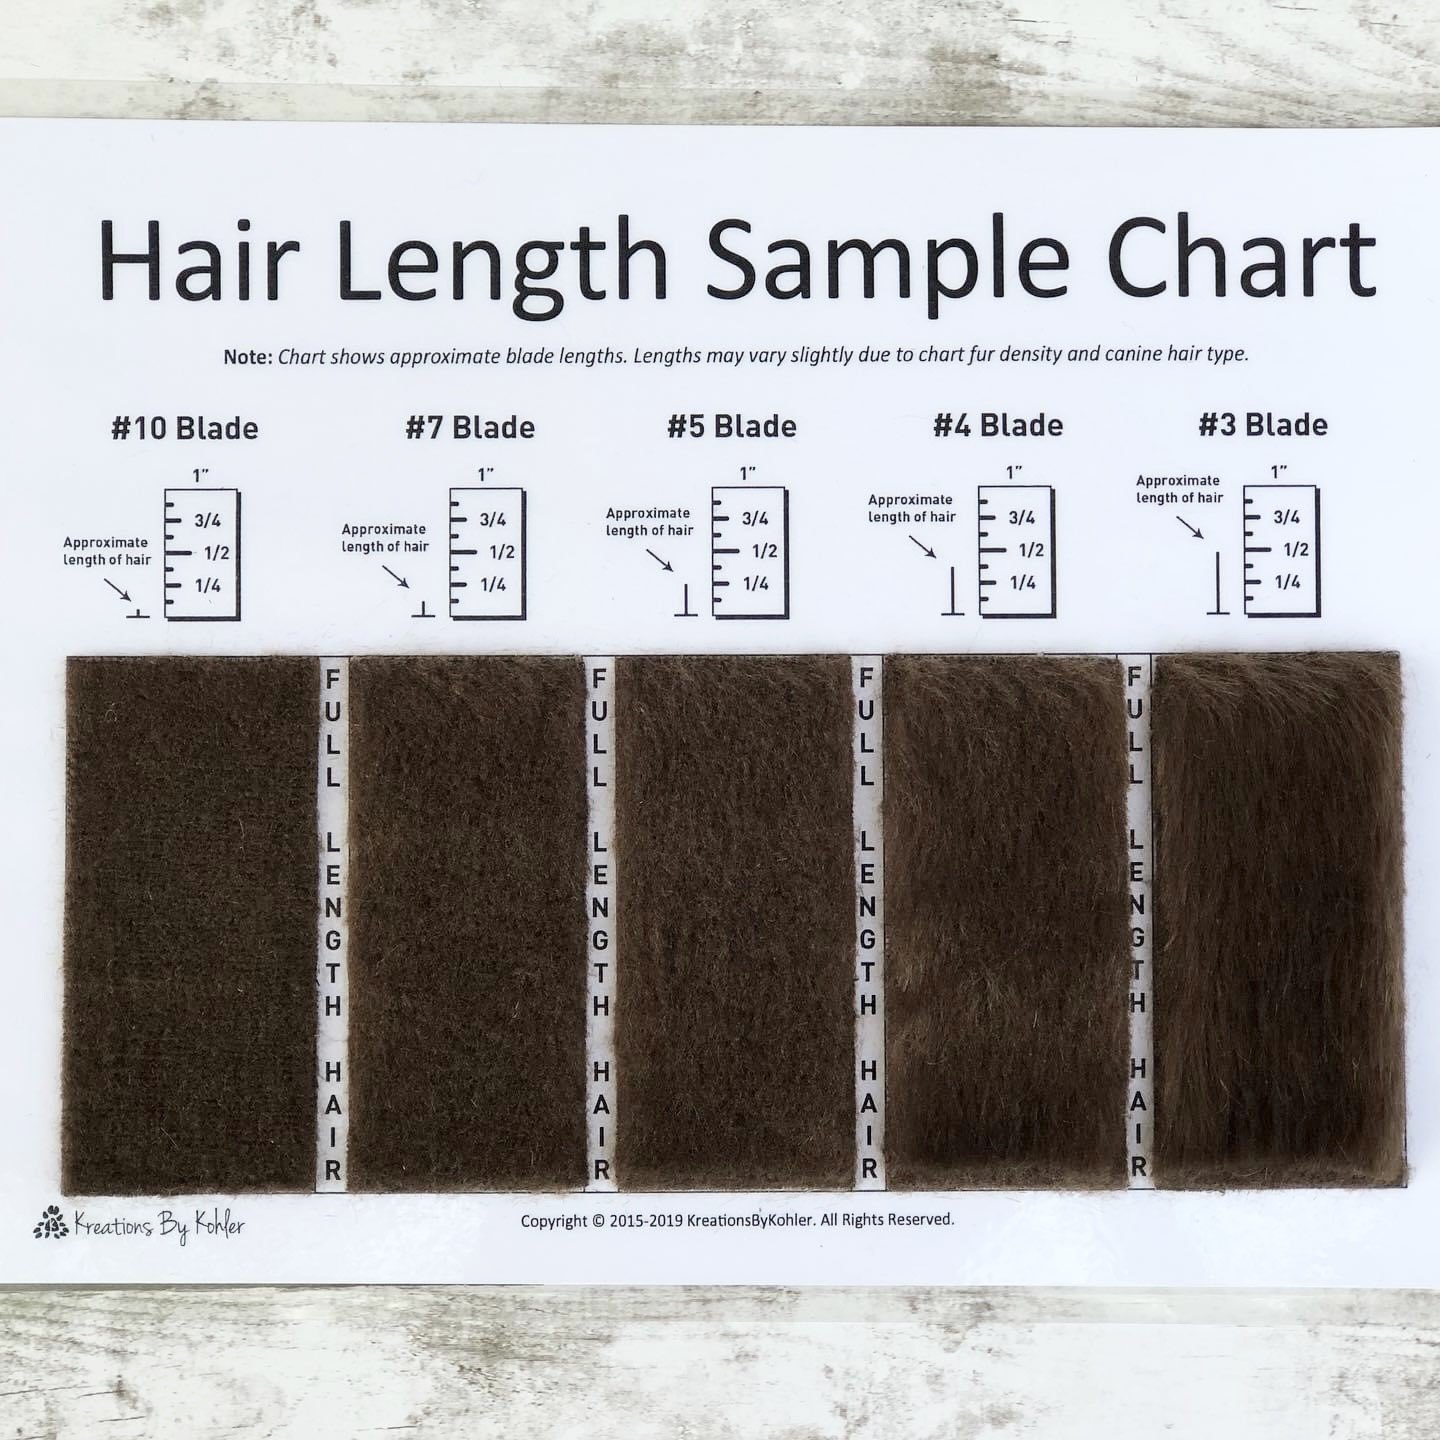 Grooming Hair Length Sample Charts by Kreations By Kohler - *2